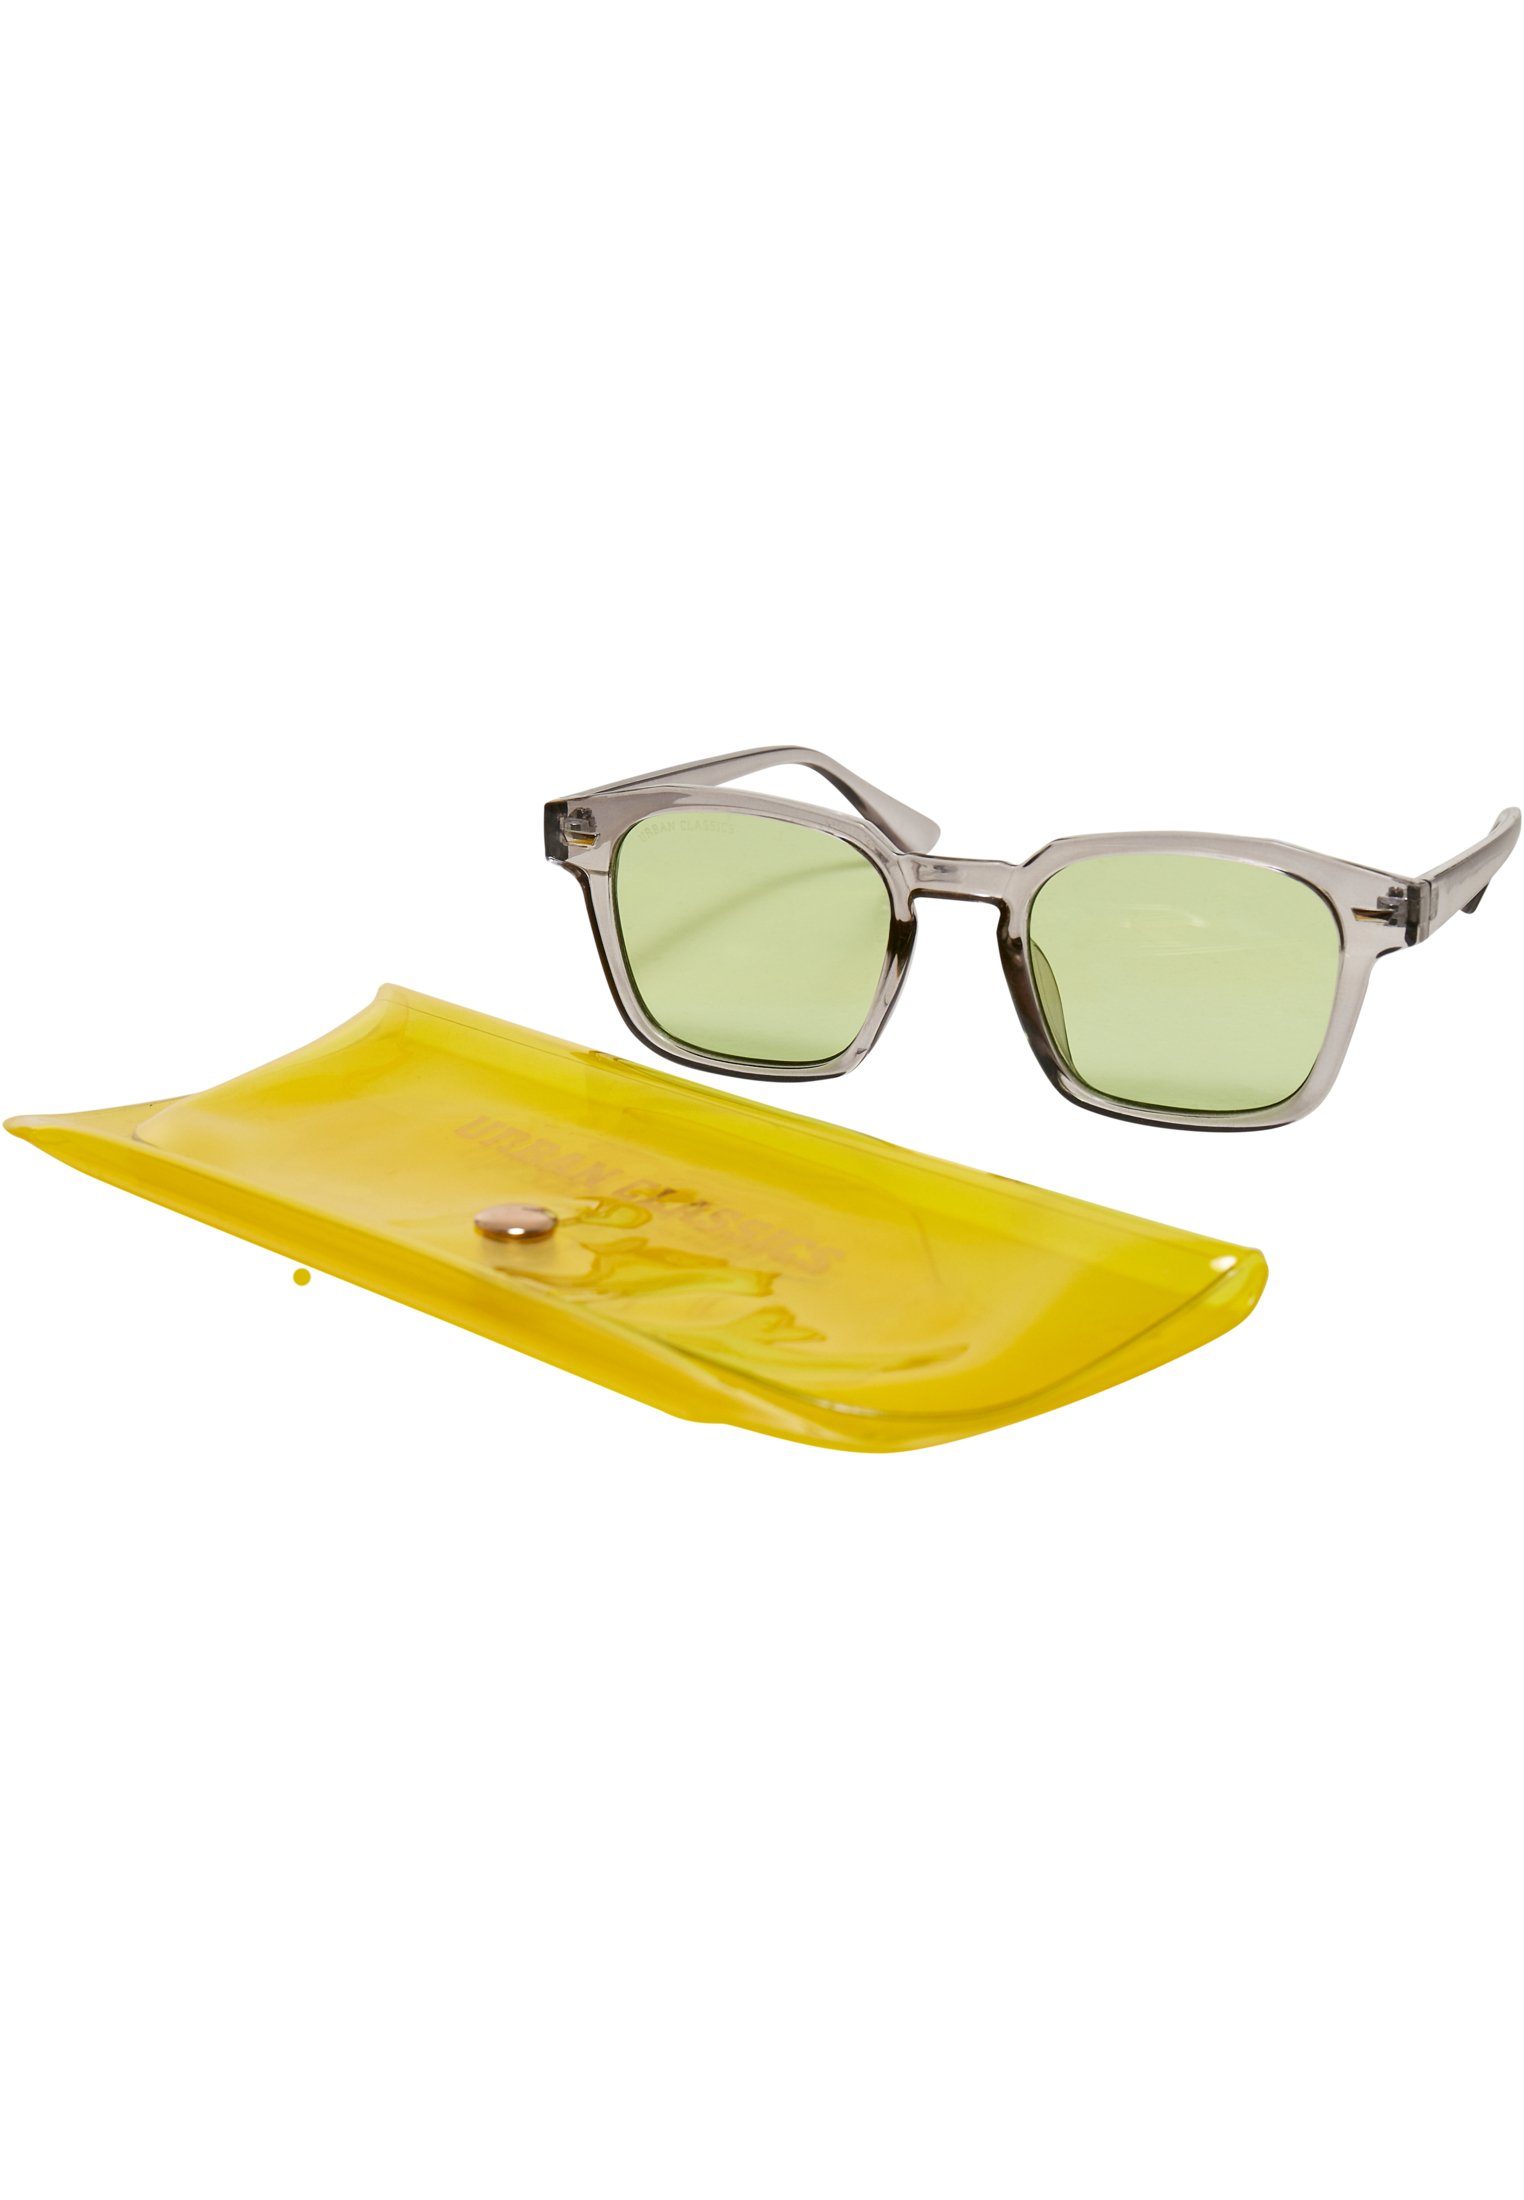 URBAN CLASSICS Sonnenbrille Unisex Sunglasses Maui With Case grey/yellow